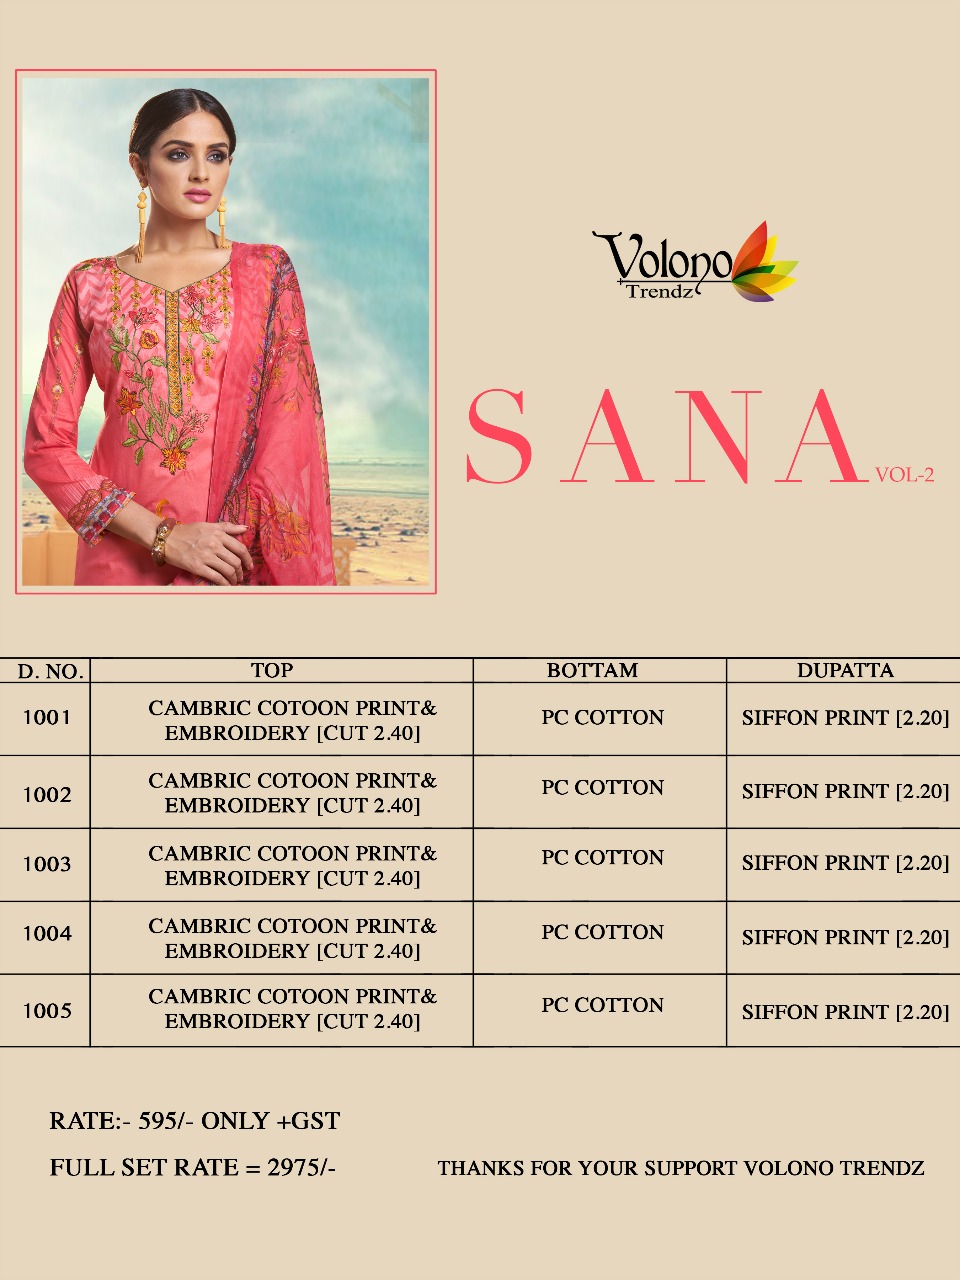 Volono trendz presents sanaa vol 2 premium lawn collection of salwar kameez